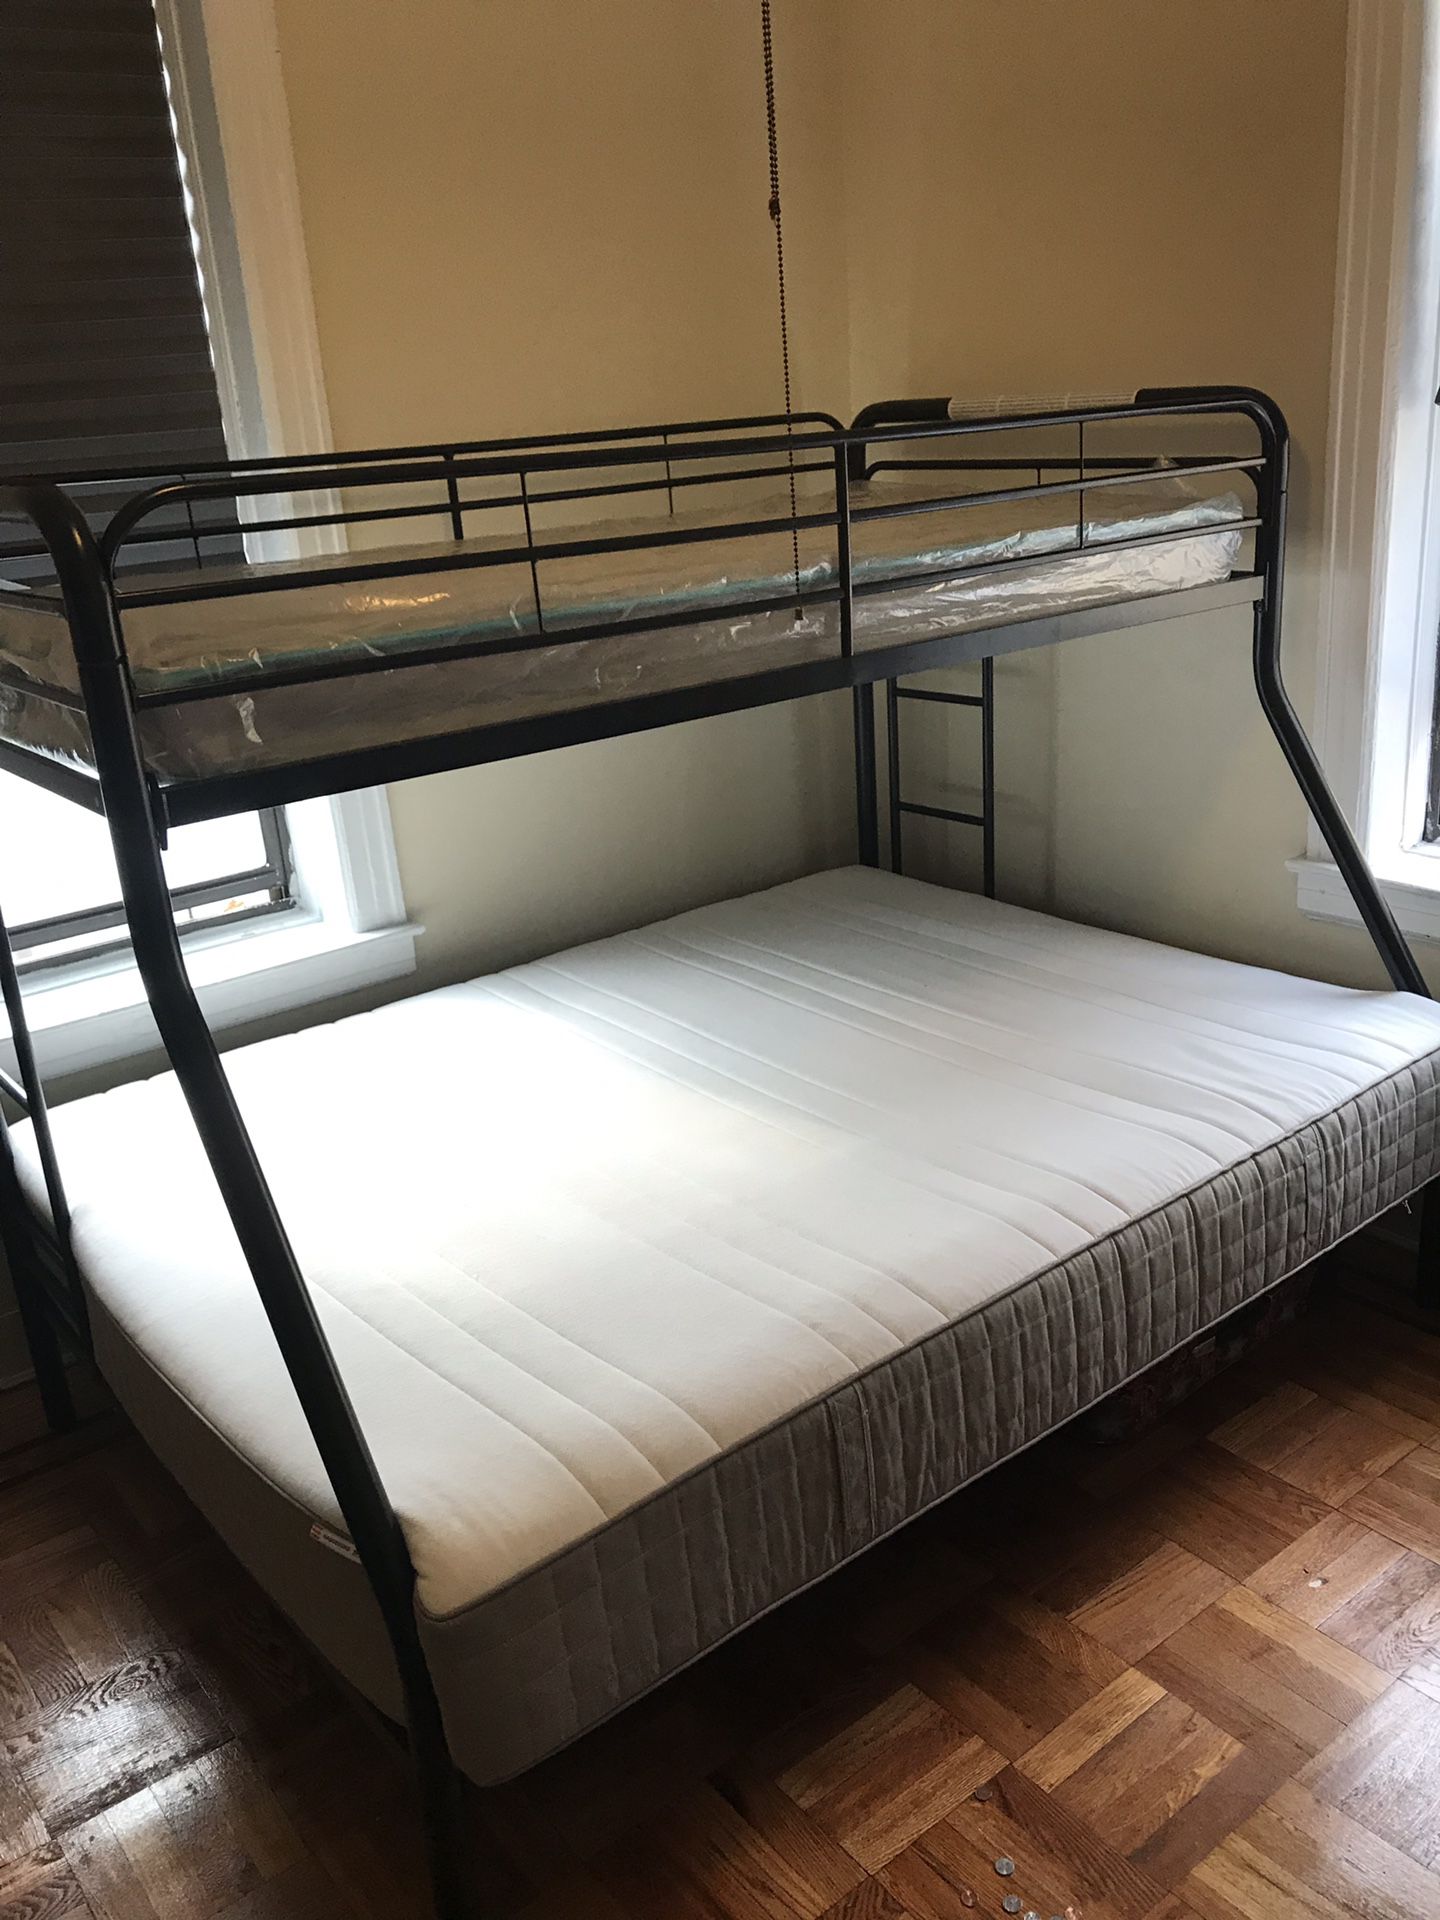 Metallic bunk bed with mattresses